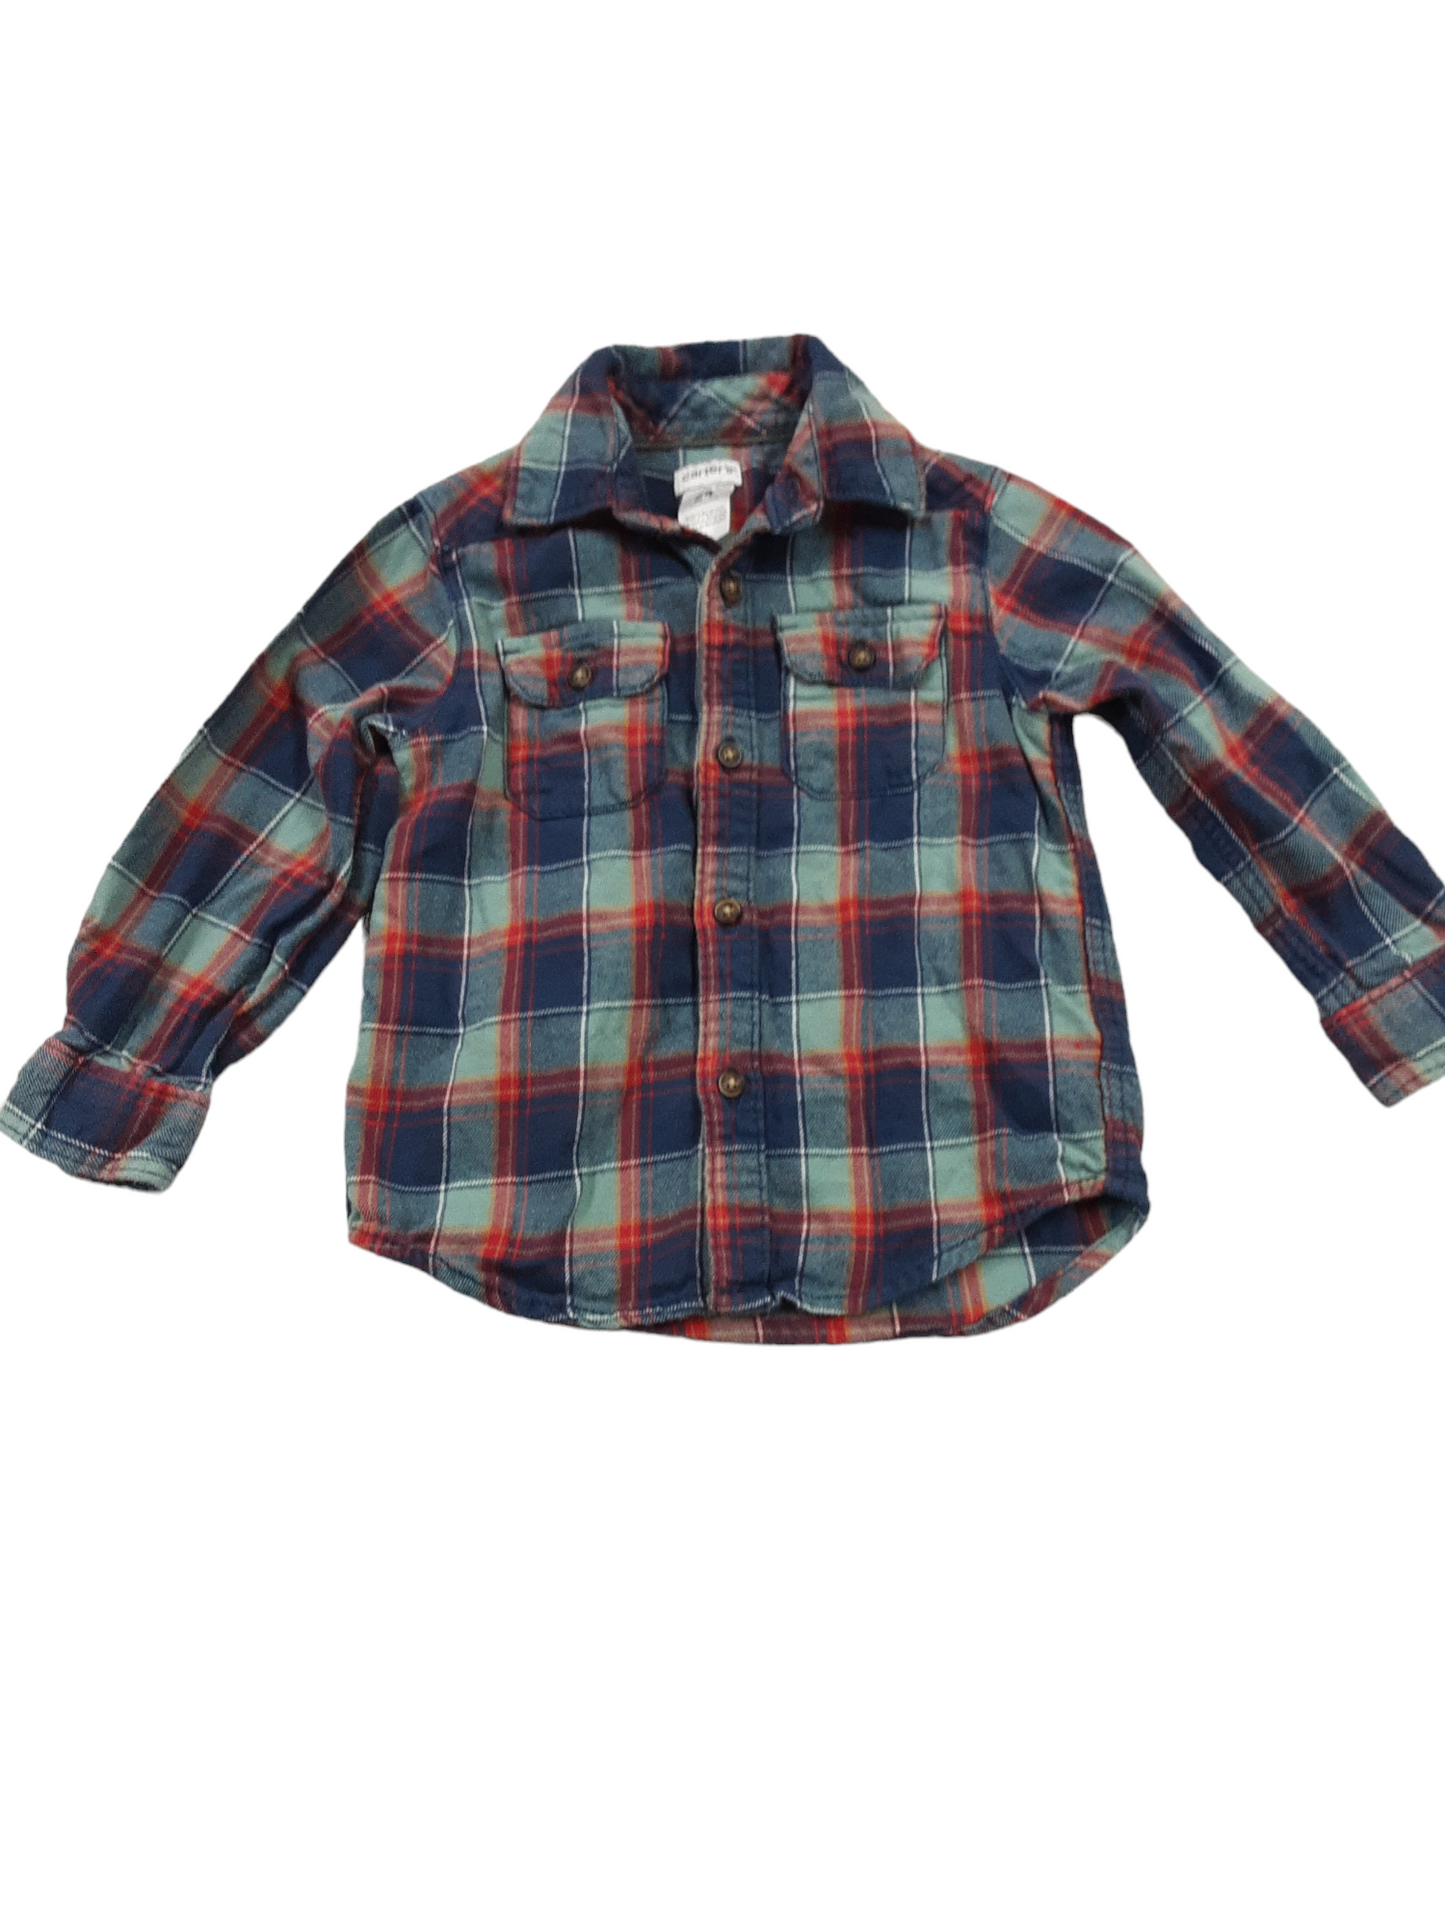 Boys flannel plaid shirt size 24months